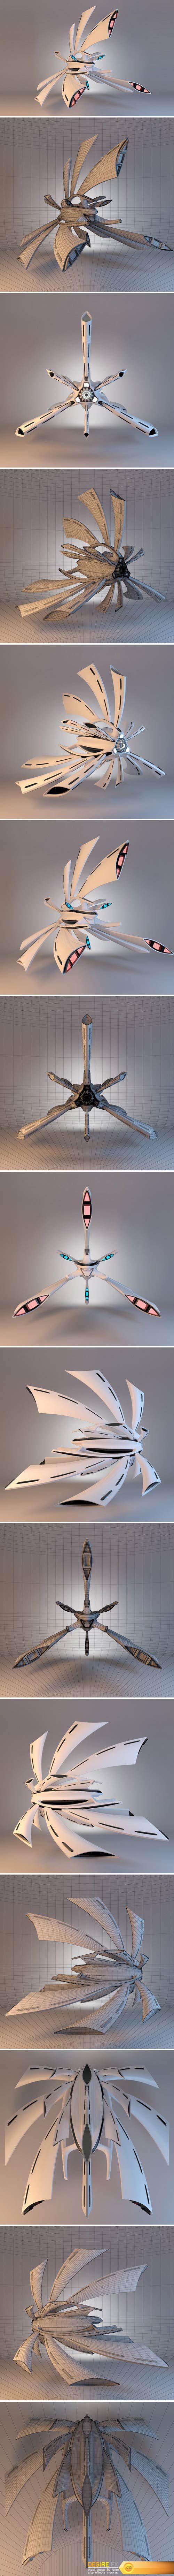 CM - Concept of Spaceship Crow 1555120